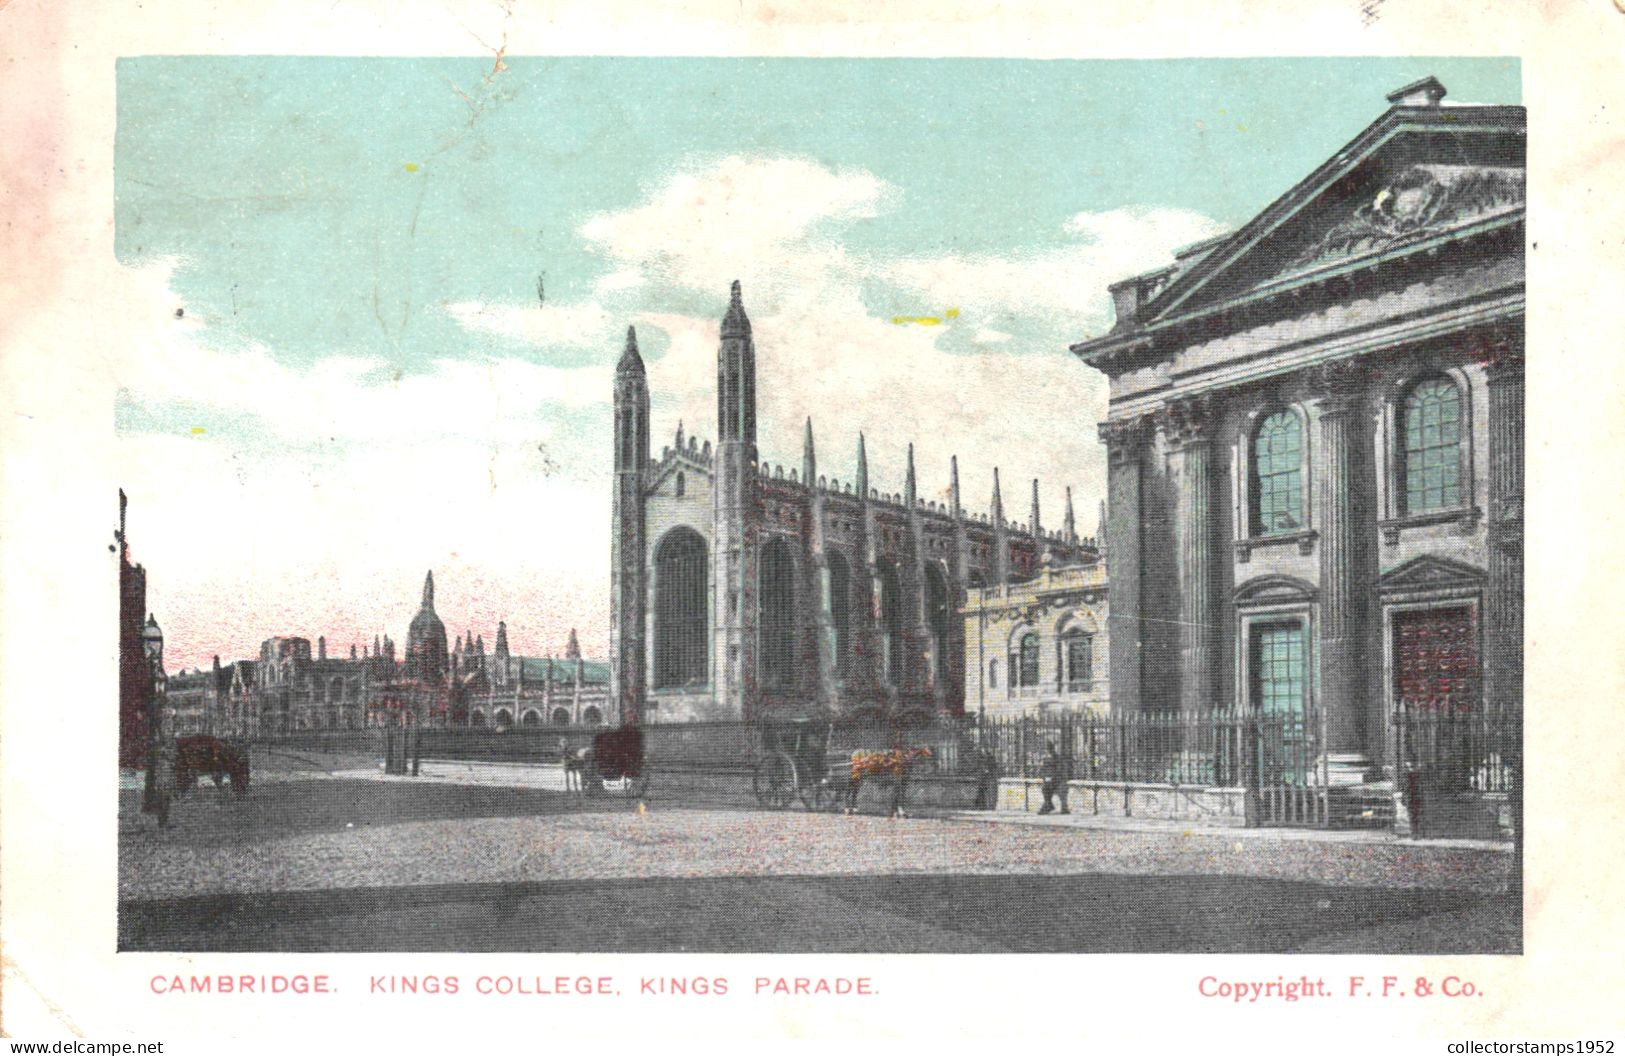 CAMBRIDGE, KINGS COLLEGE, CARRIAGE, ARCHITECTURE, UNITED KINGDOM - Cambridge